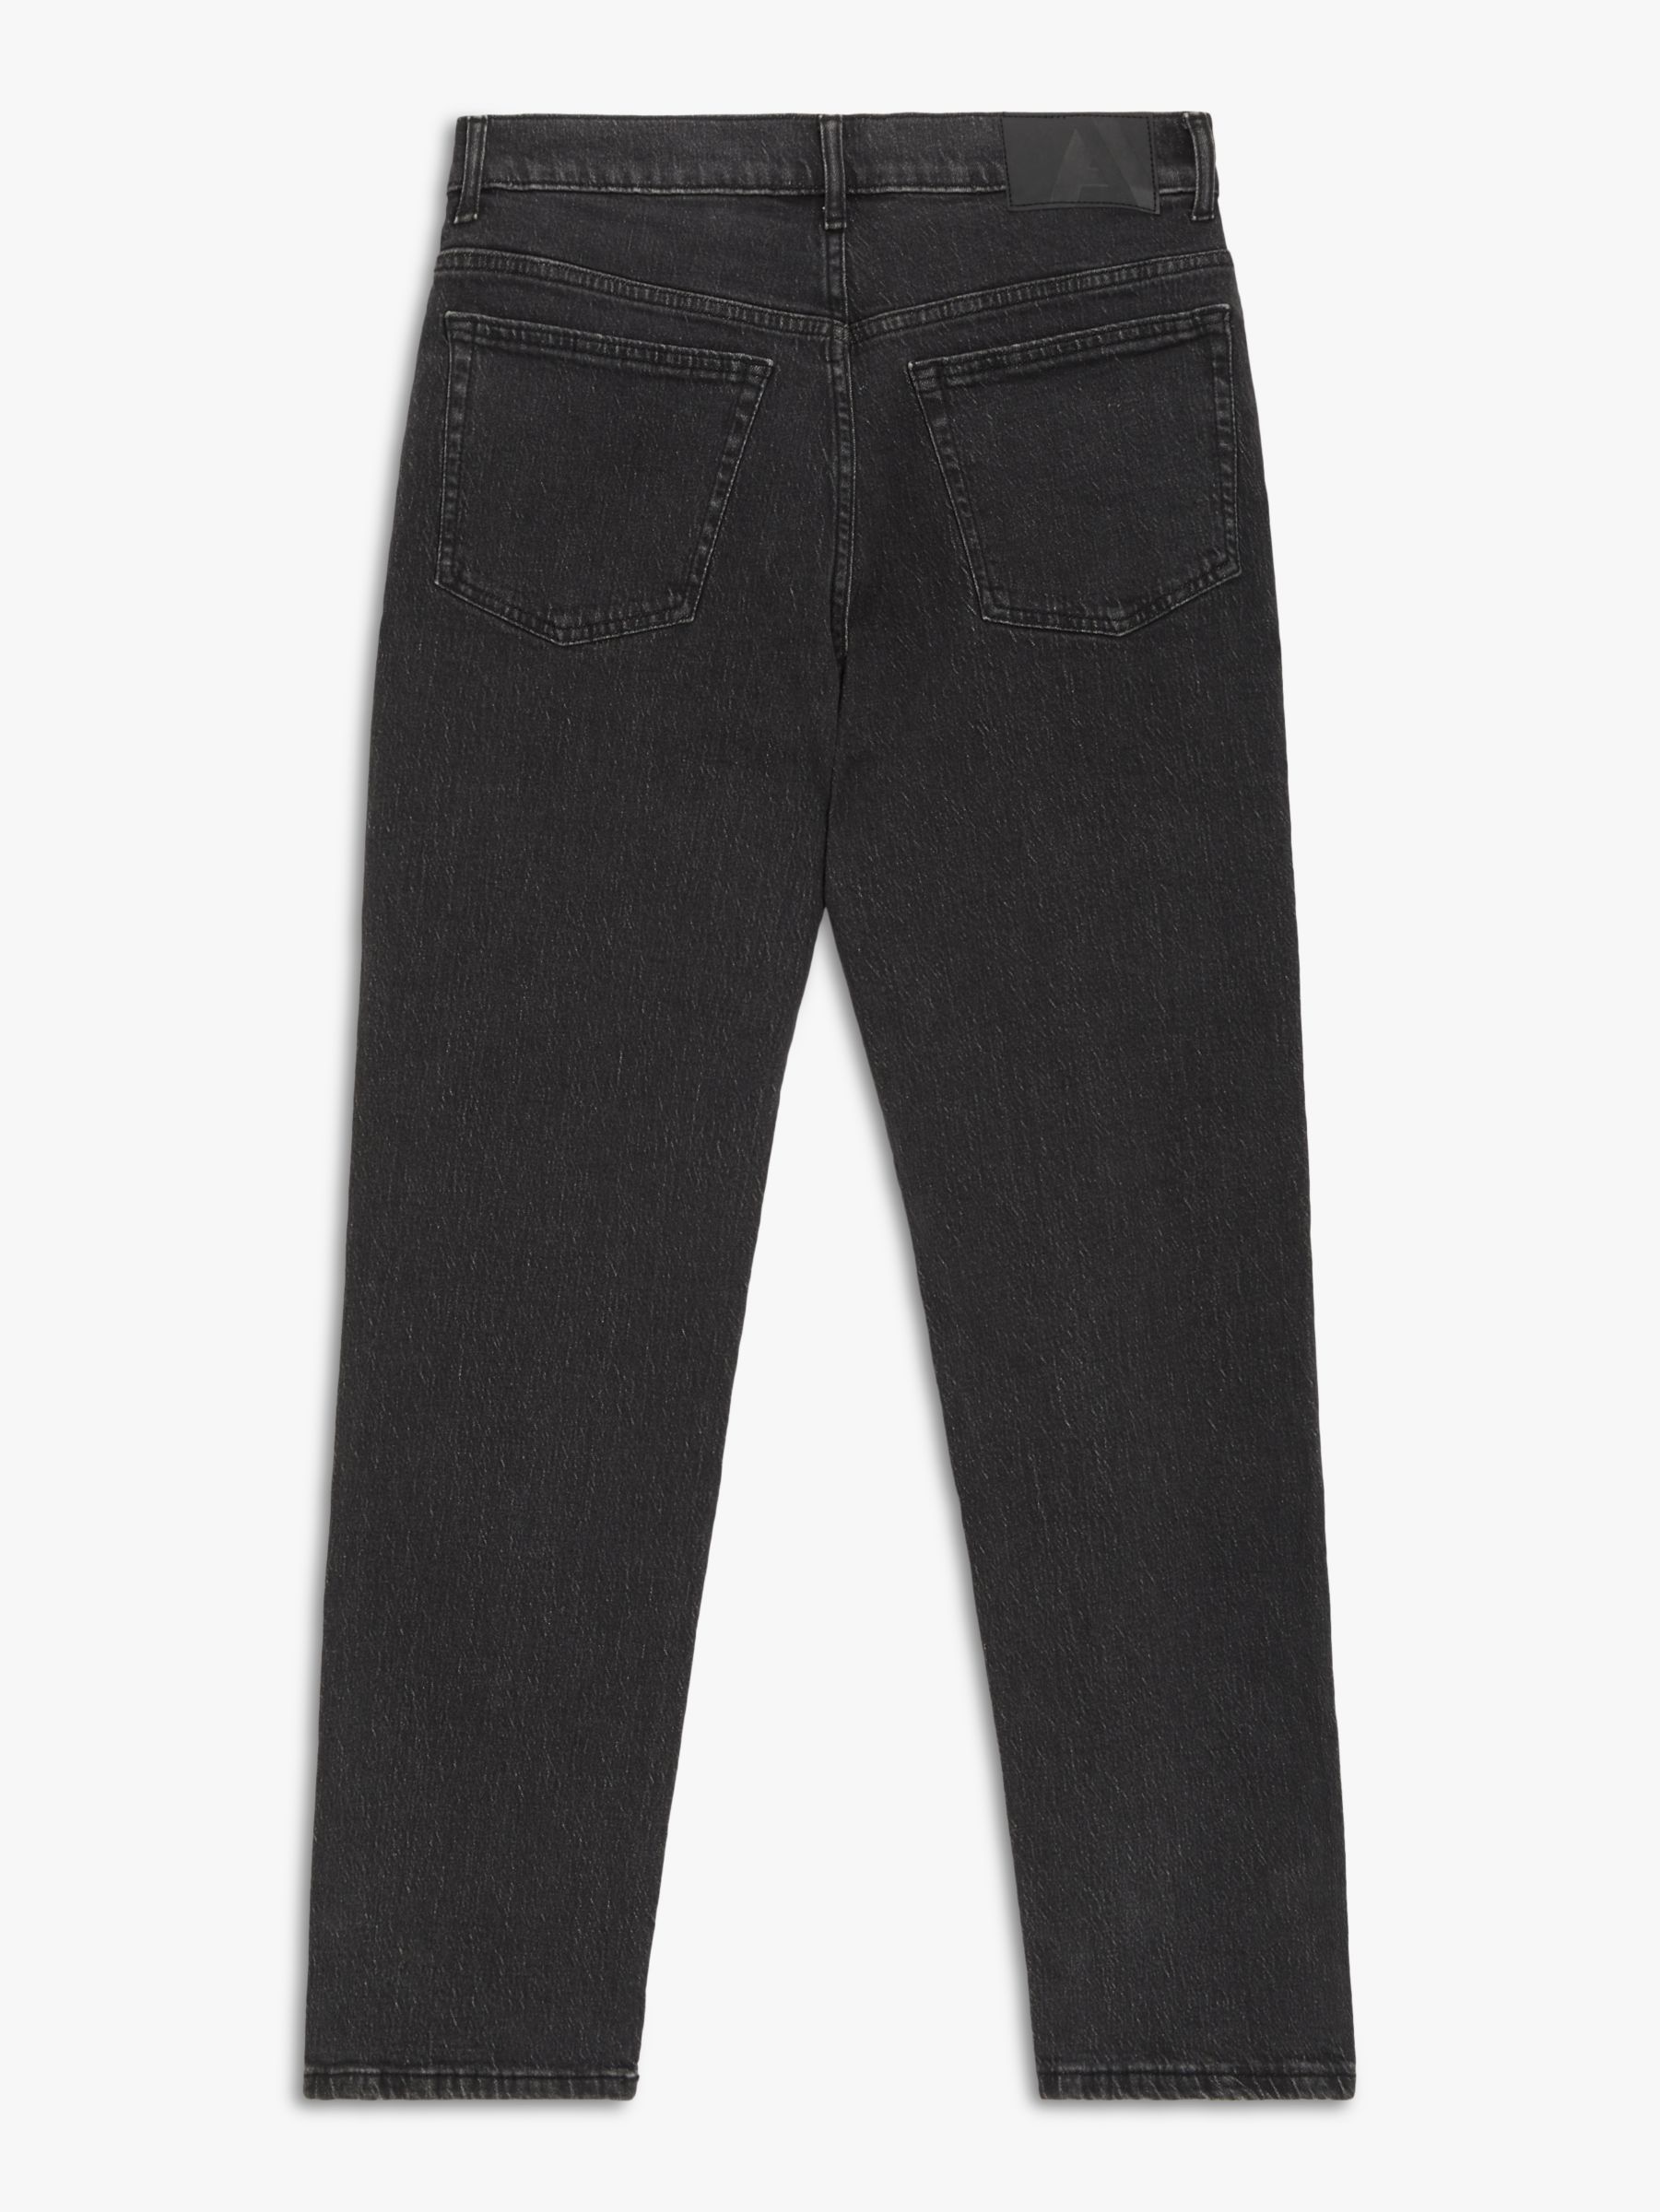 John Lewis ANYDAY Straight Fit Denim Jeans, Black, 30R